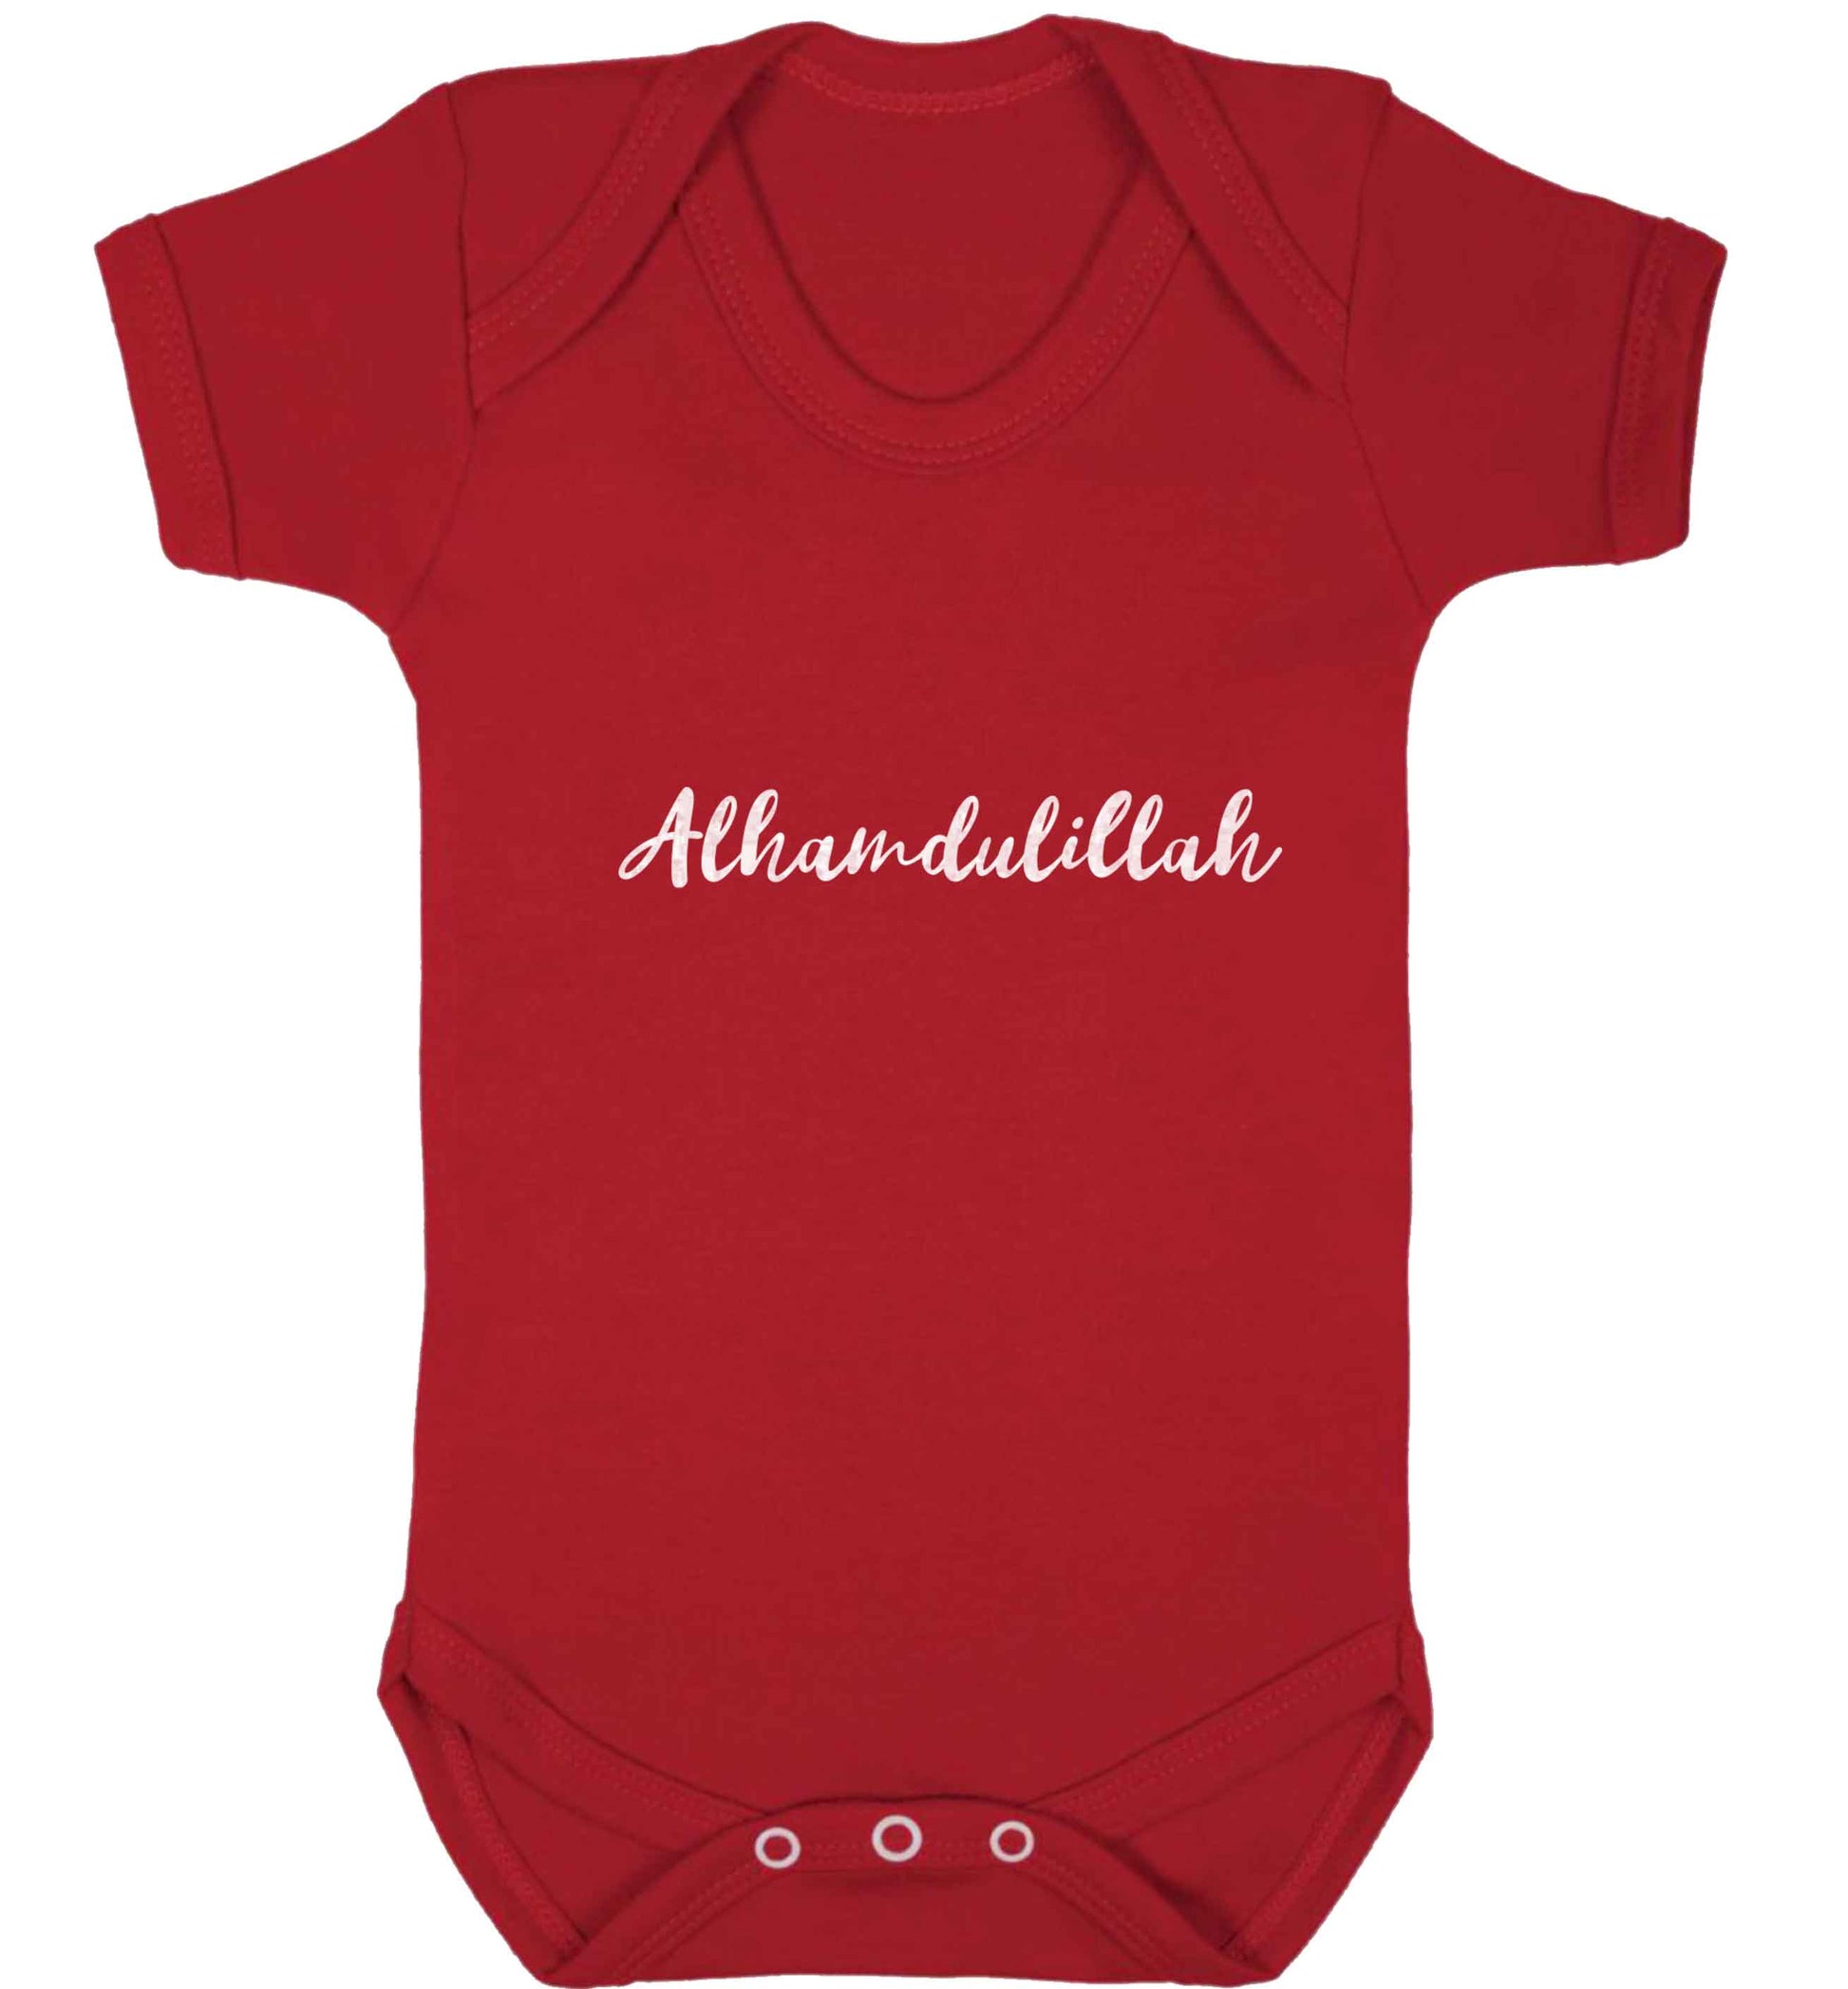 alhamdulillah baby vest red 18-24 months